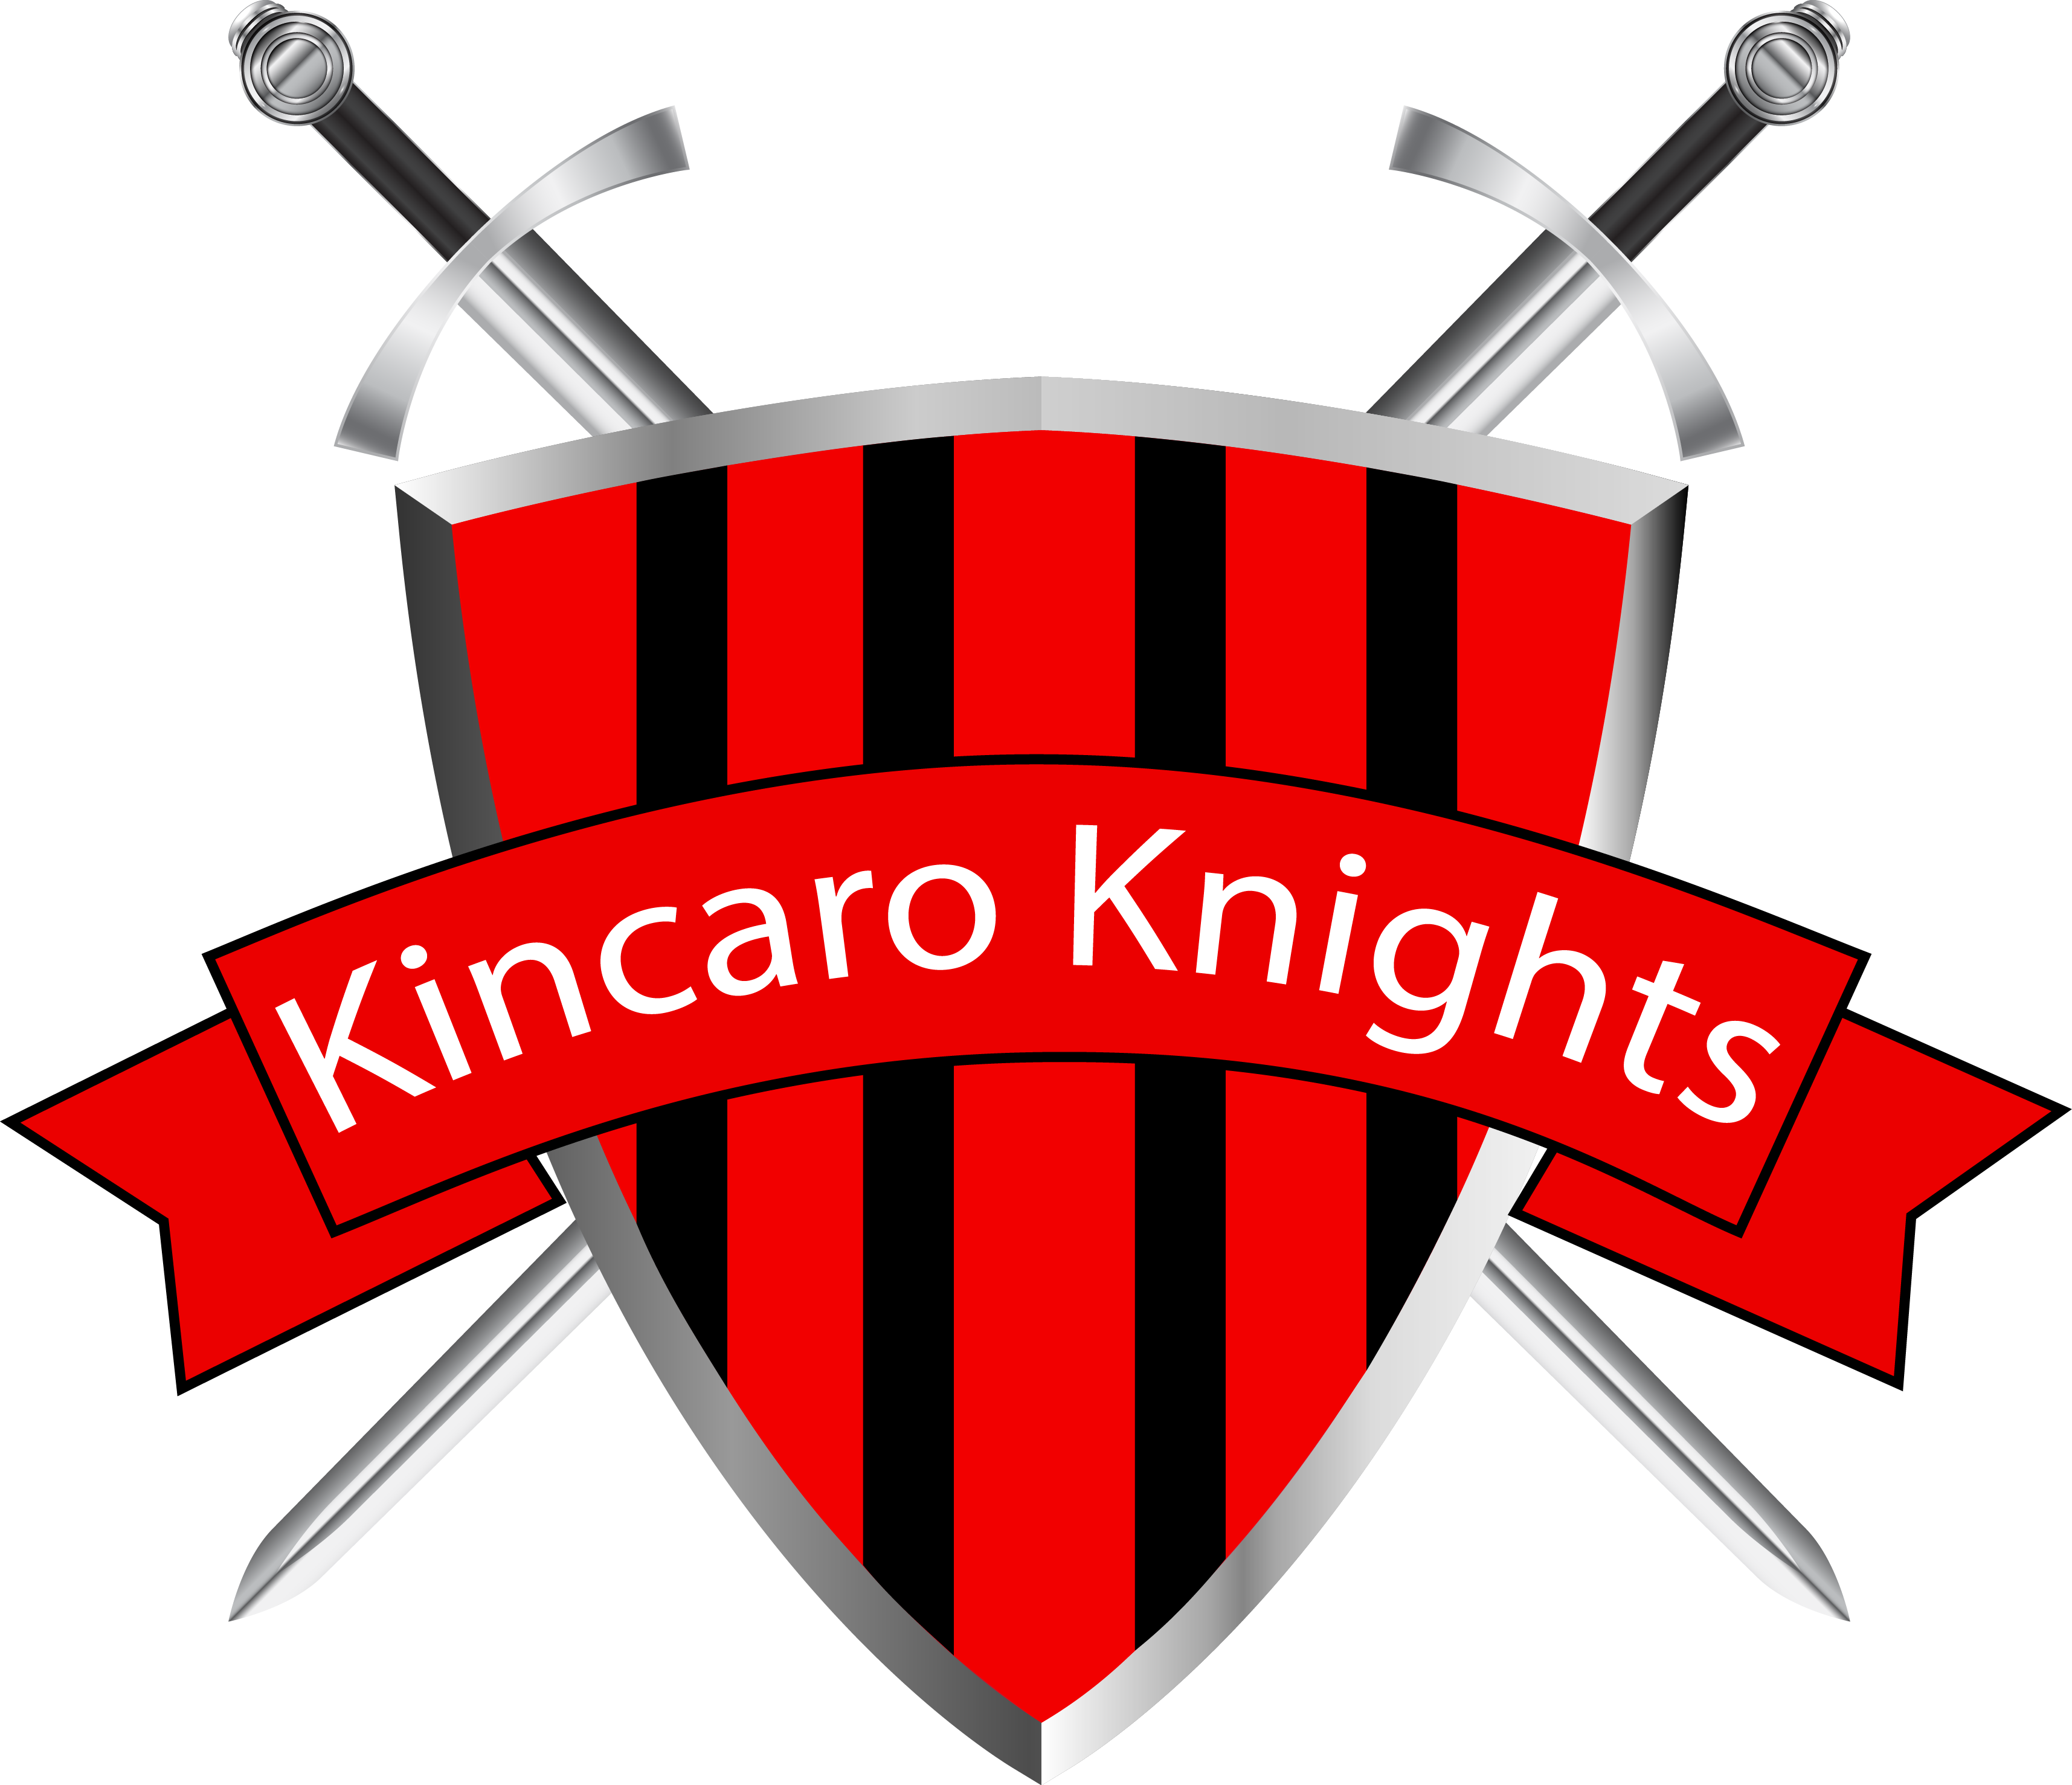 The Kincaro Knights Club-logo